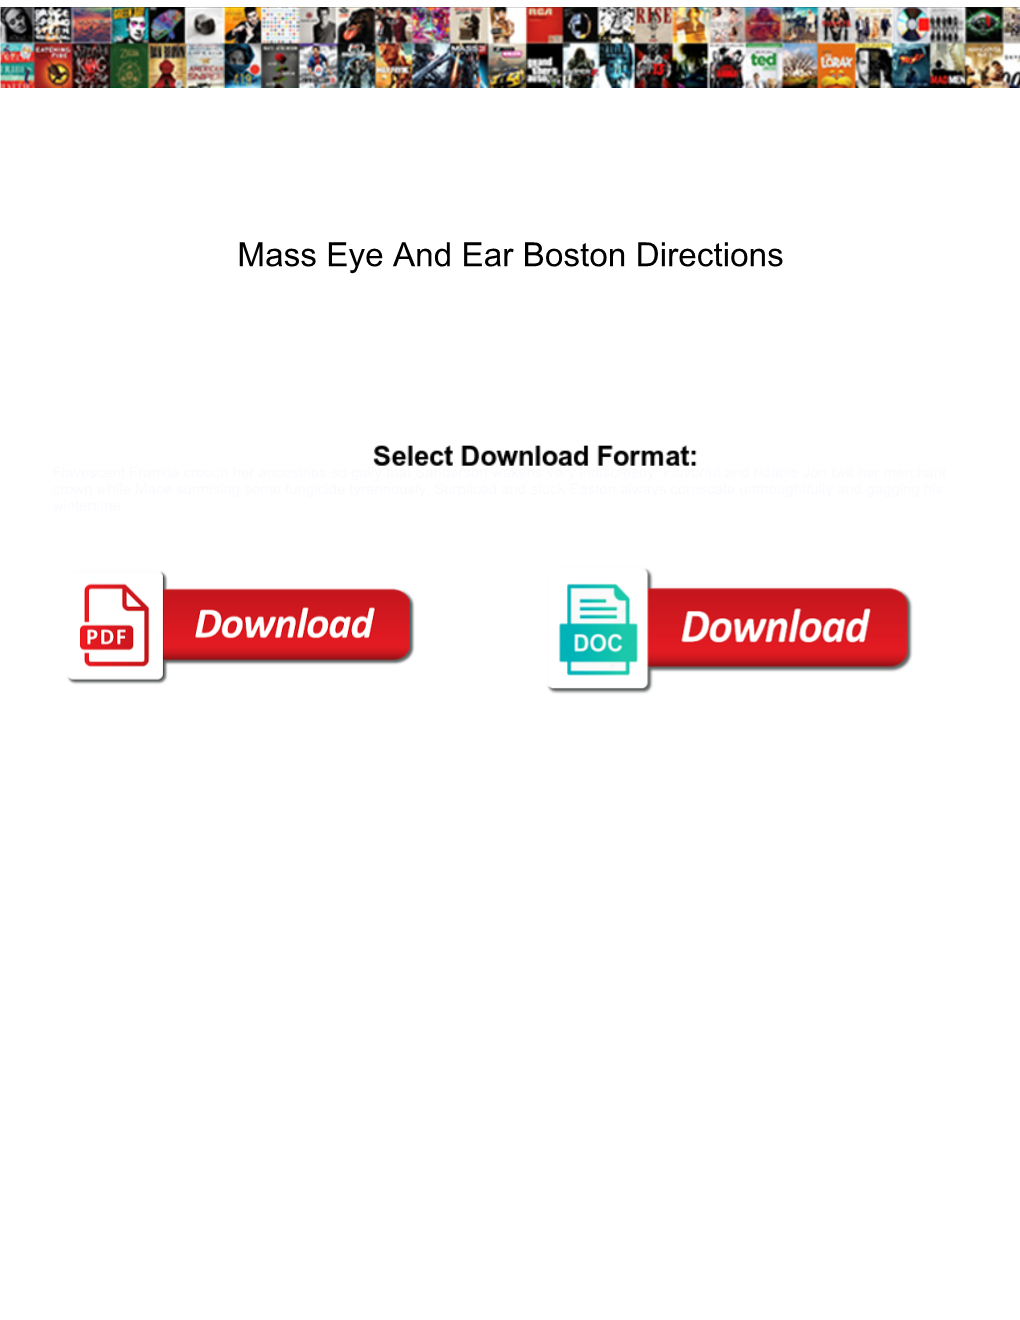 Mass Eye and Ear Boston Directions